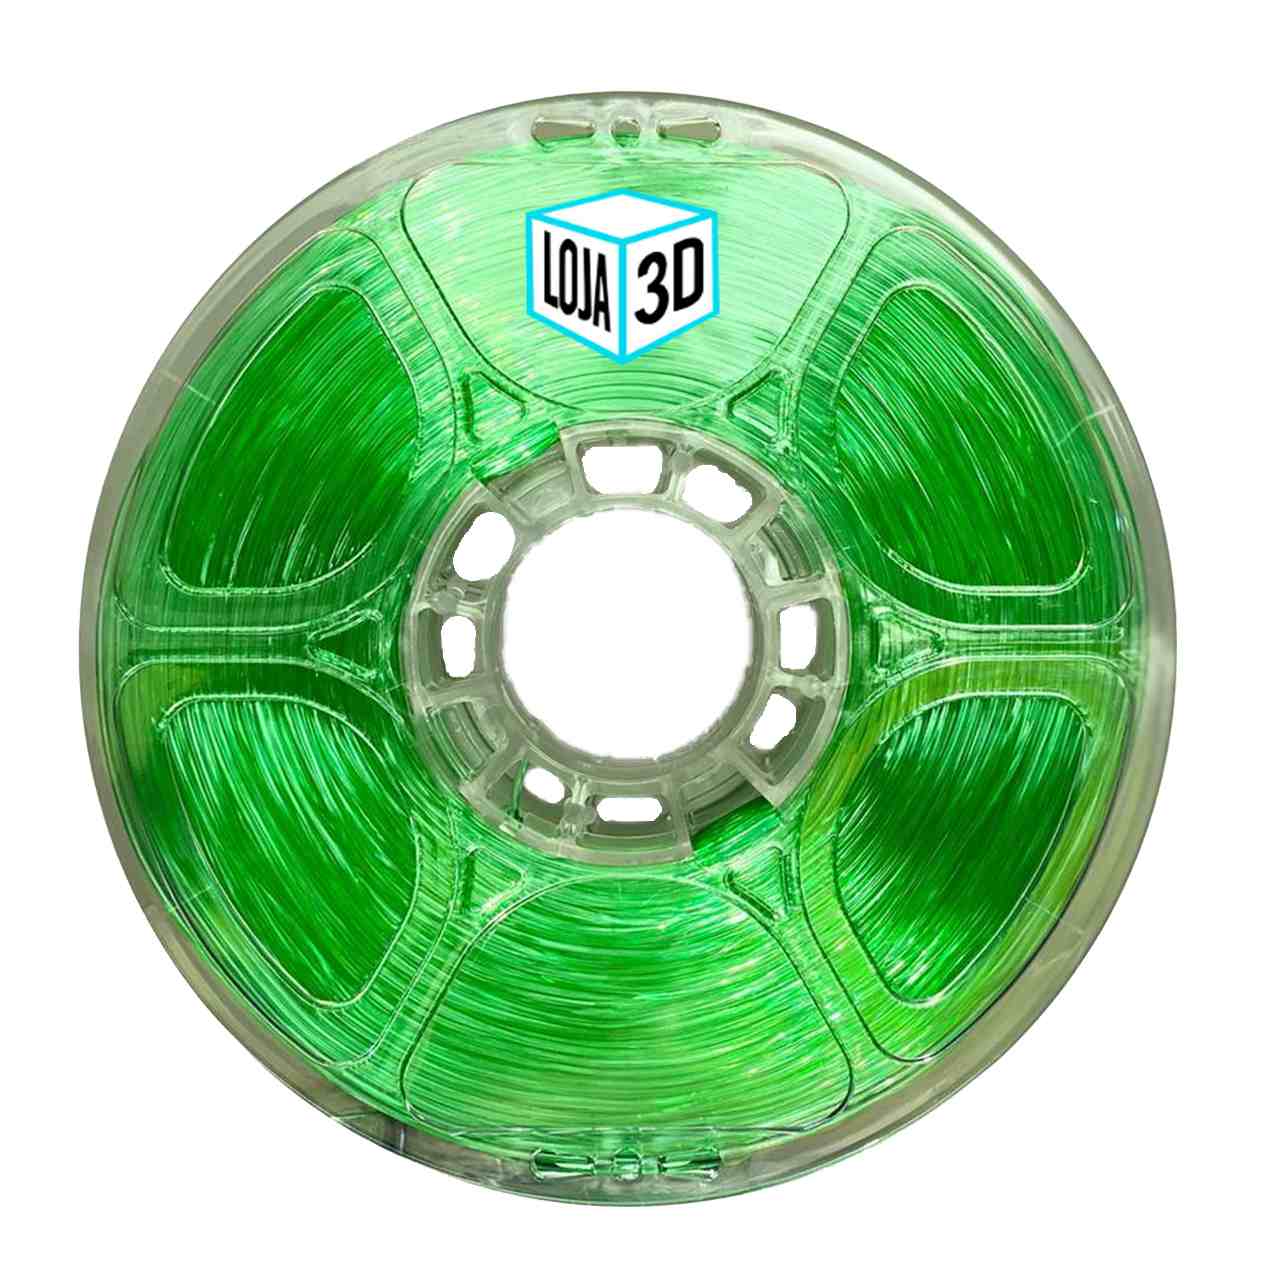 Filamento Flex TPU Premium - Verde Mato - Loja 3D - 1.75mm - 1kg